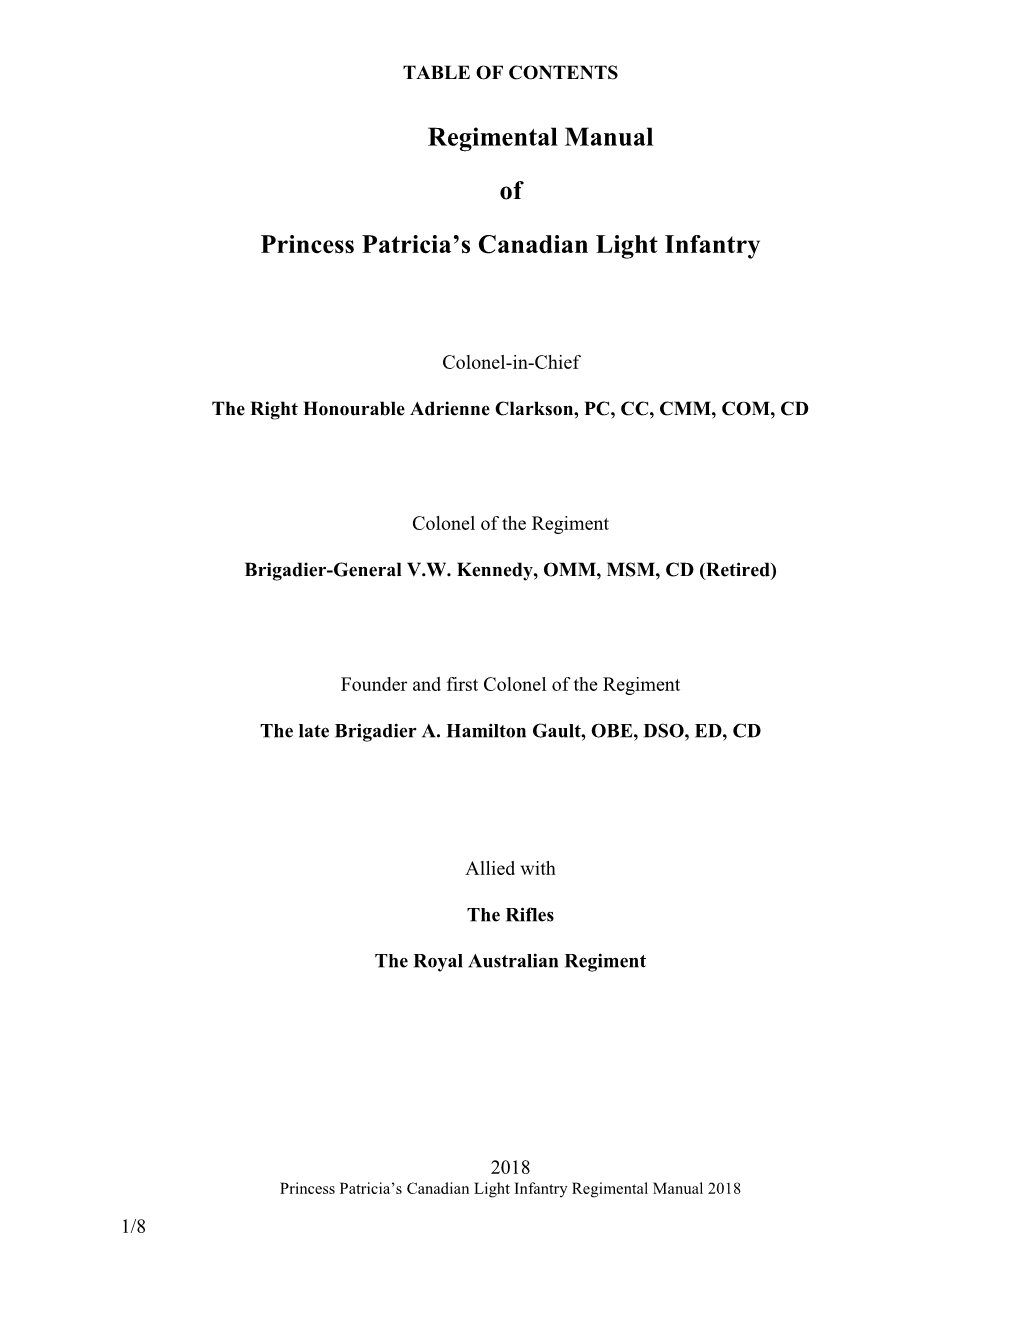 Regimental Manual of Princess Patricia's Canadian Light Infantry